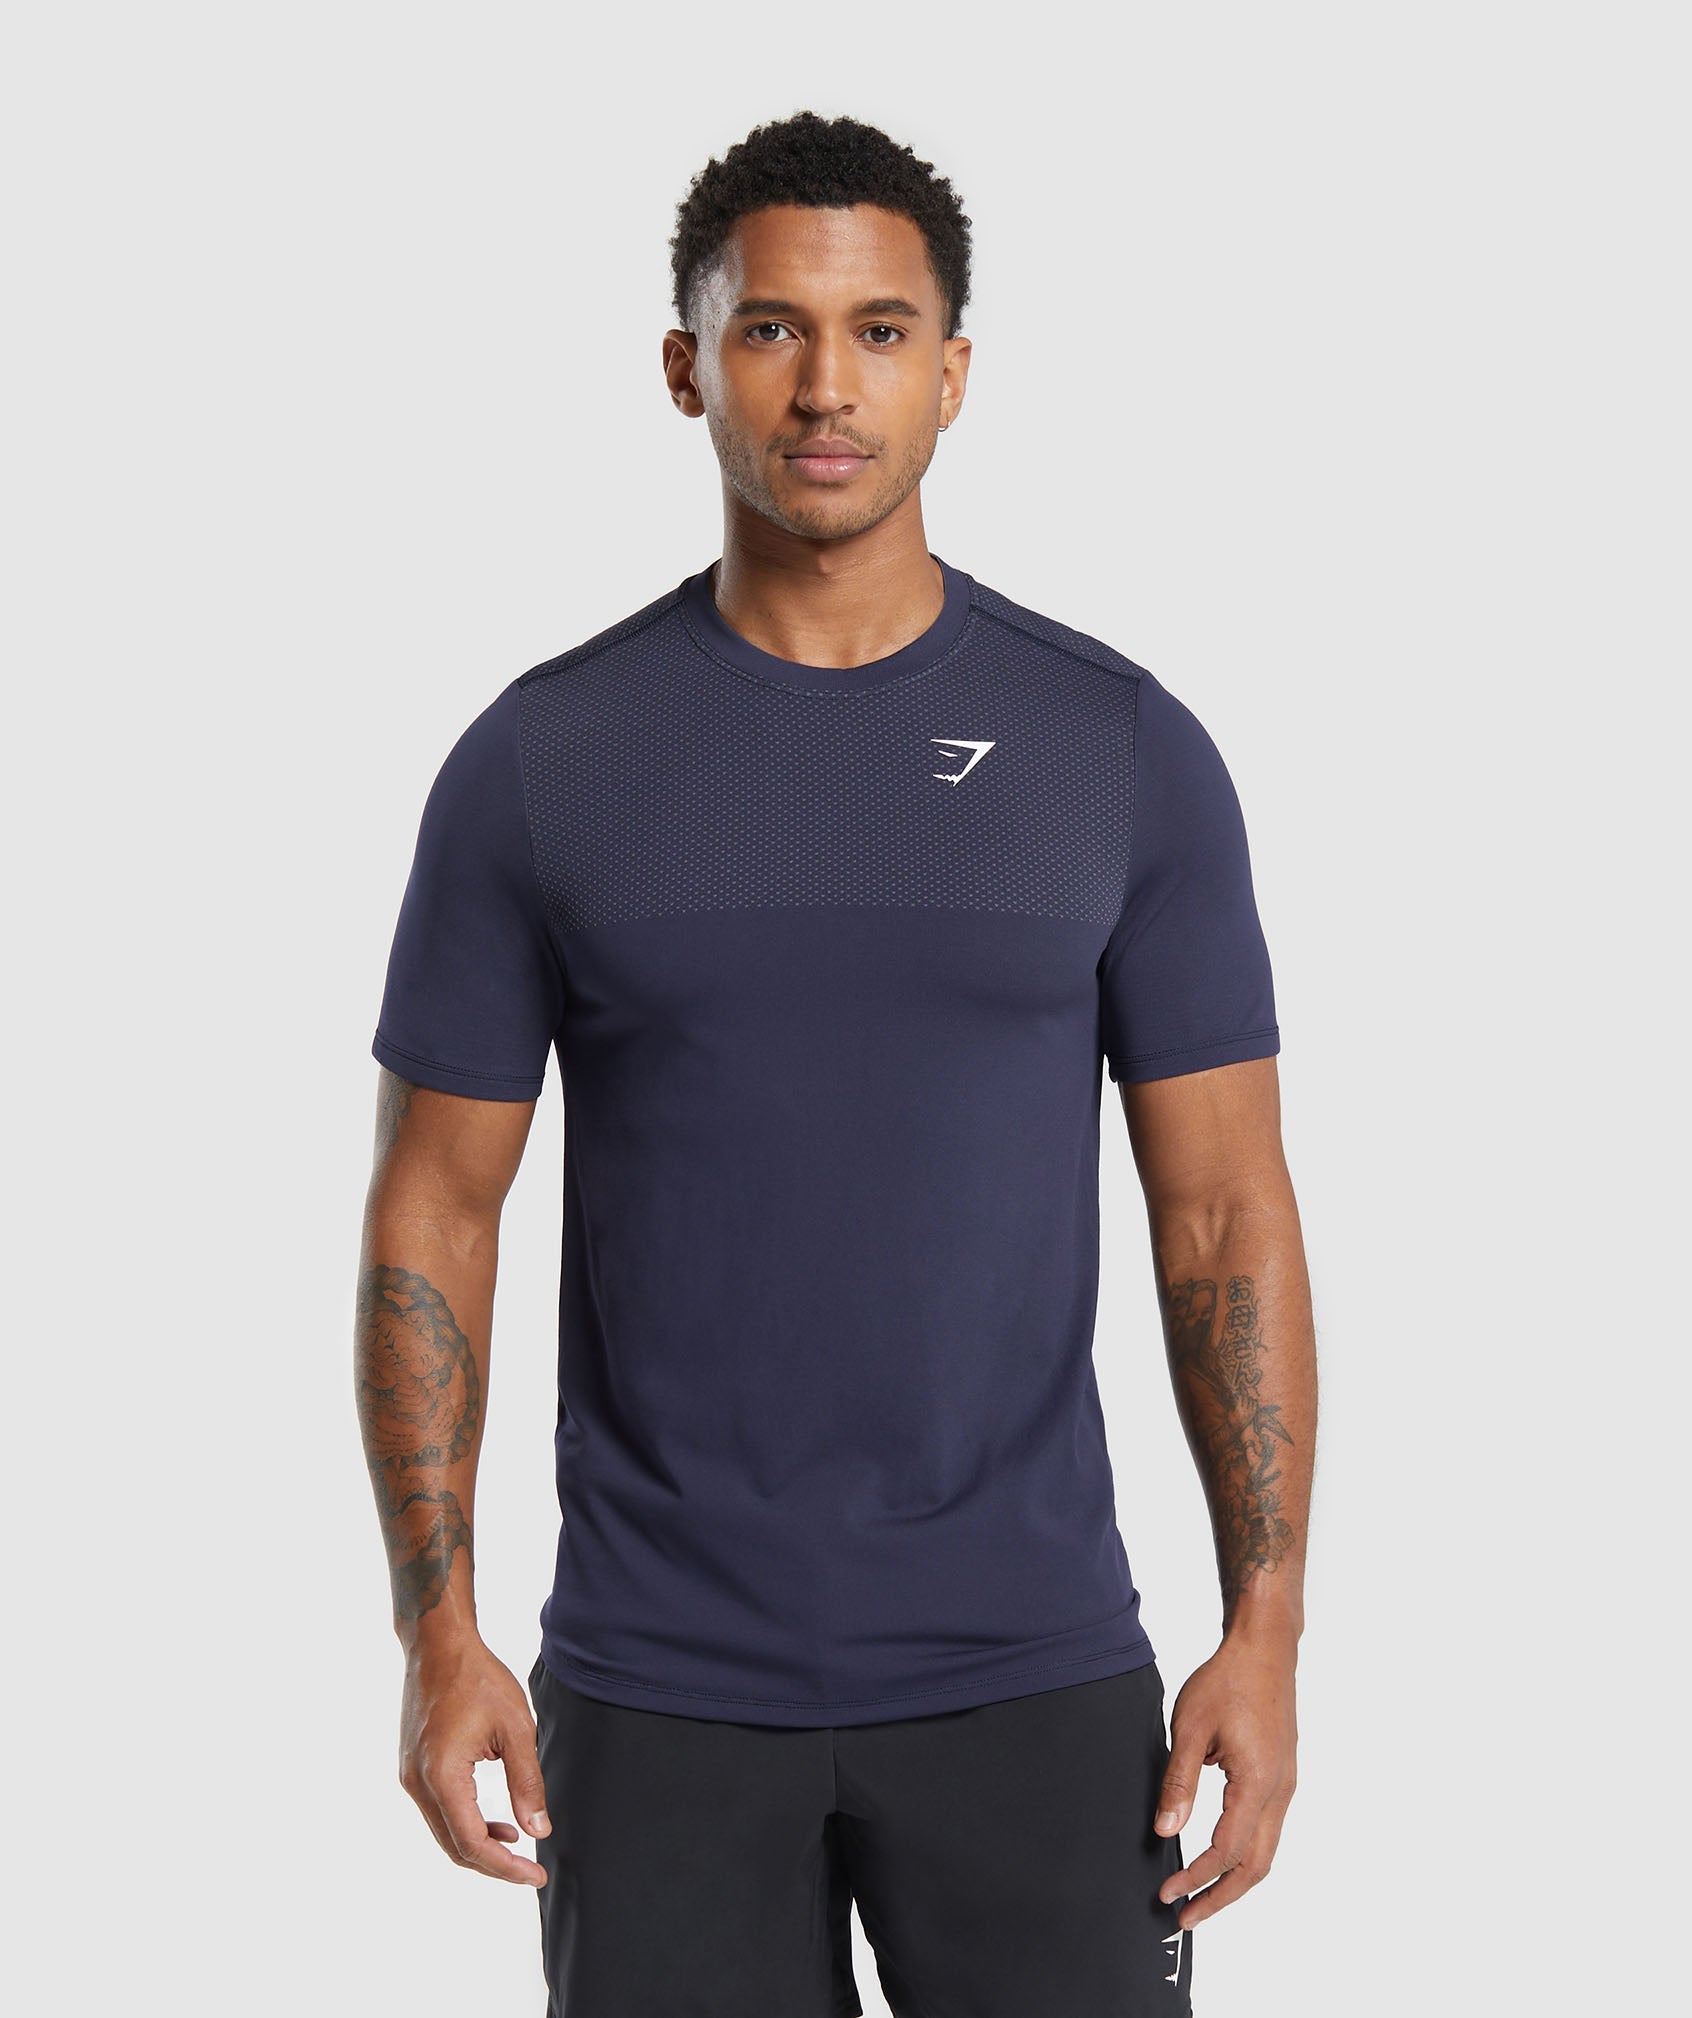 Vital Seamless T-Shirt in Navy/Light Grey